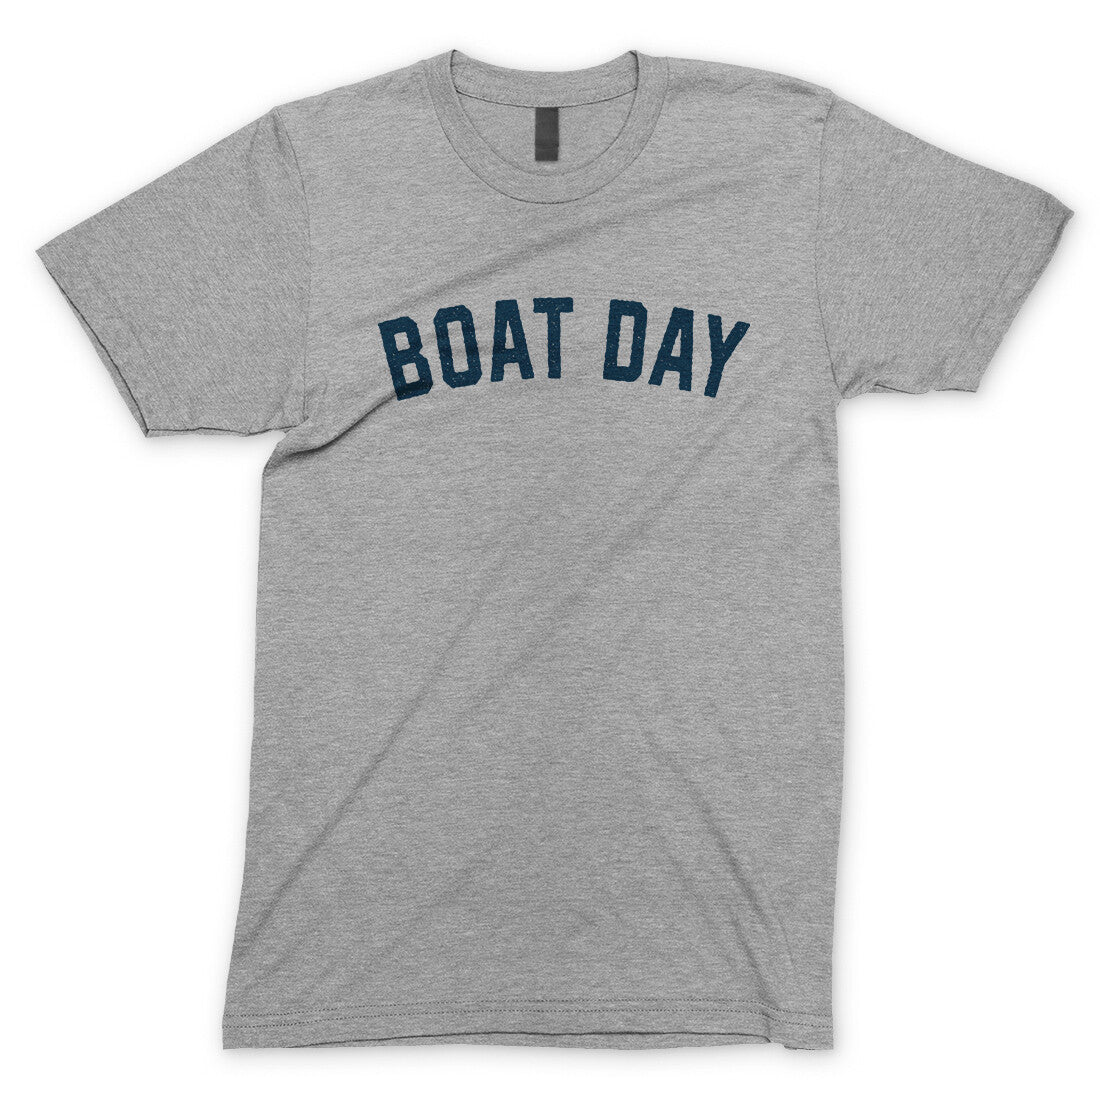 Boat Day in Sport Grey Color